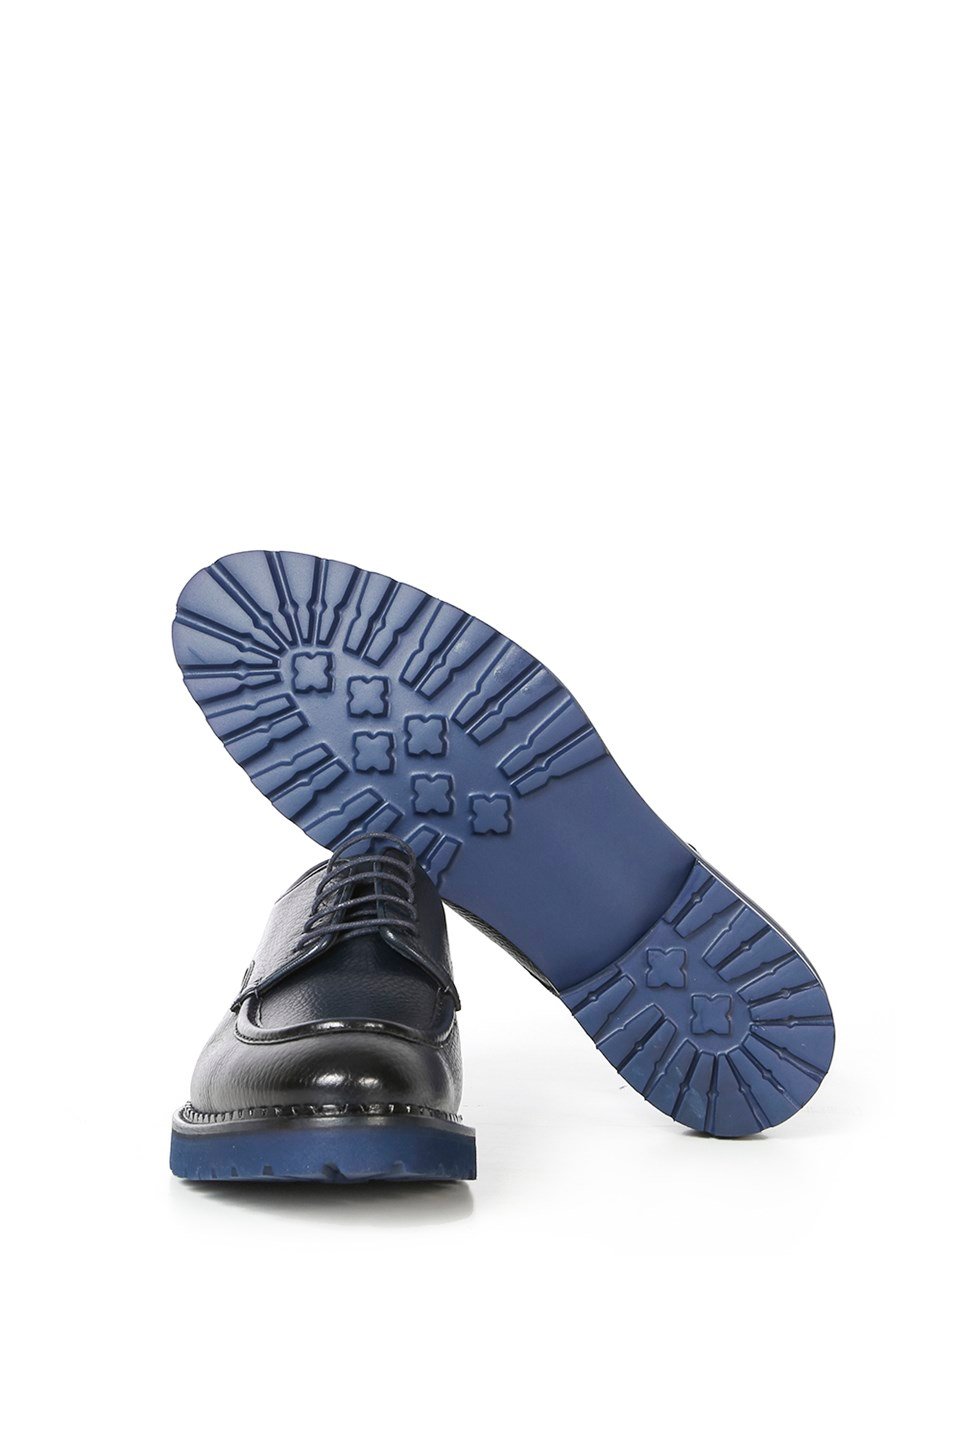 Zeroy Men's Classic Shoe Navy Blue Floater - İLVİ